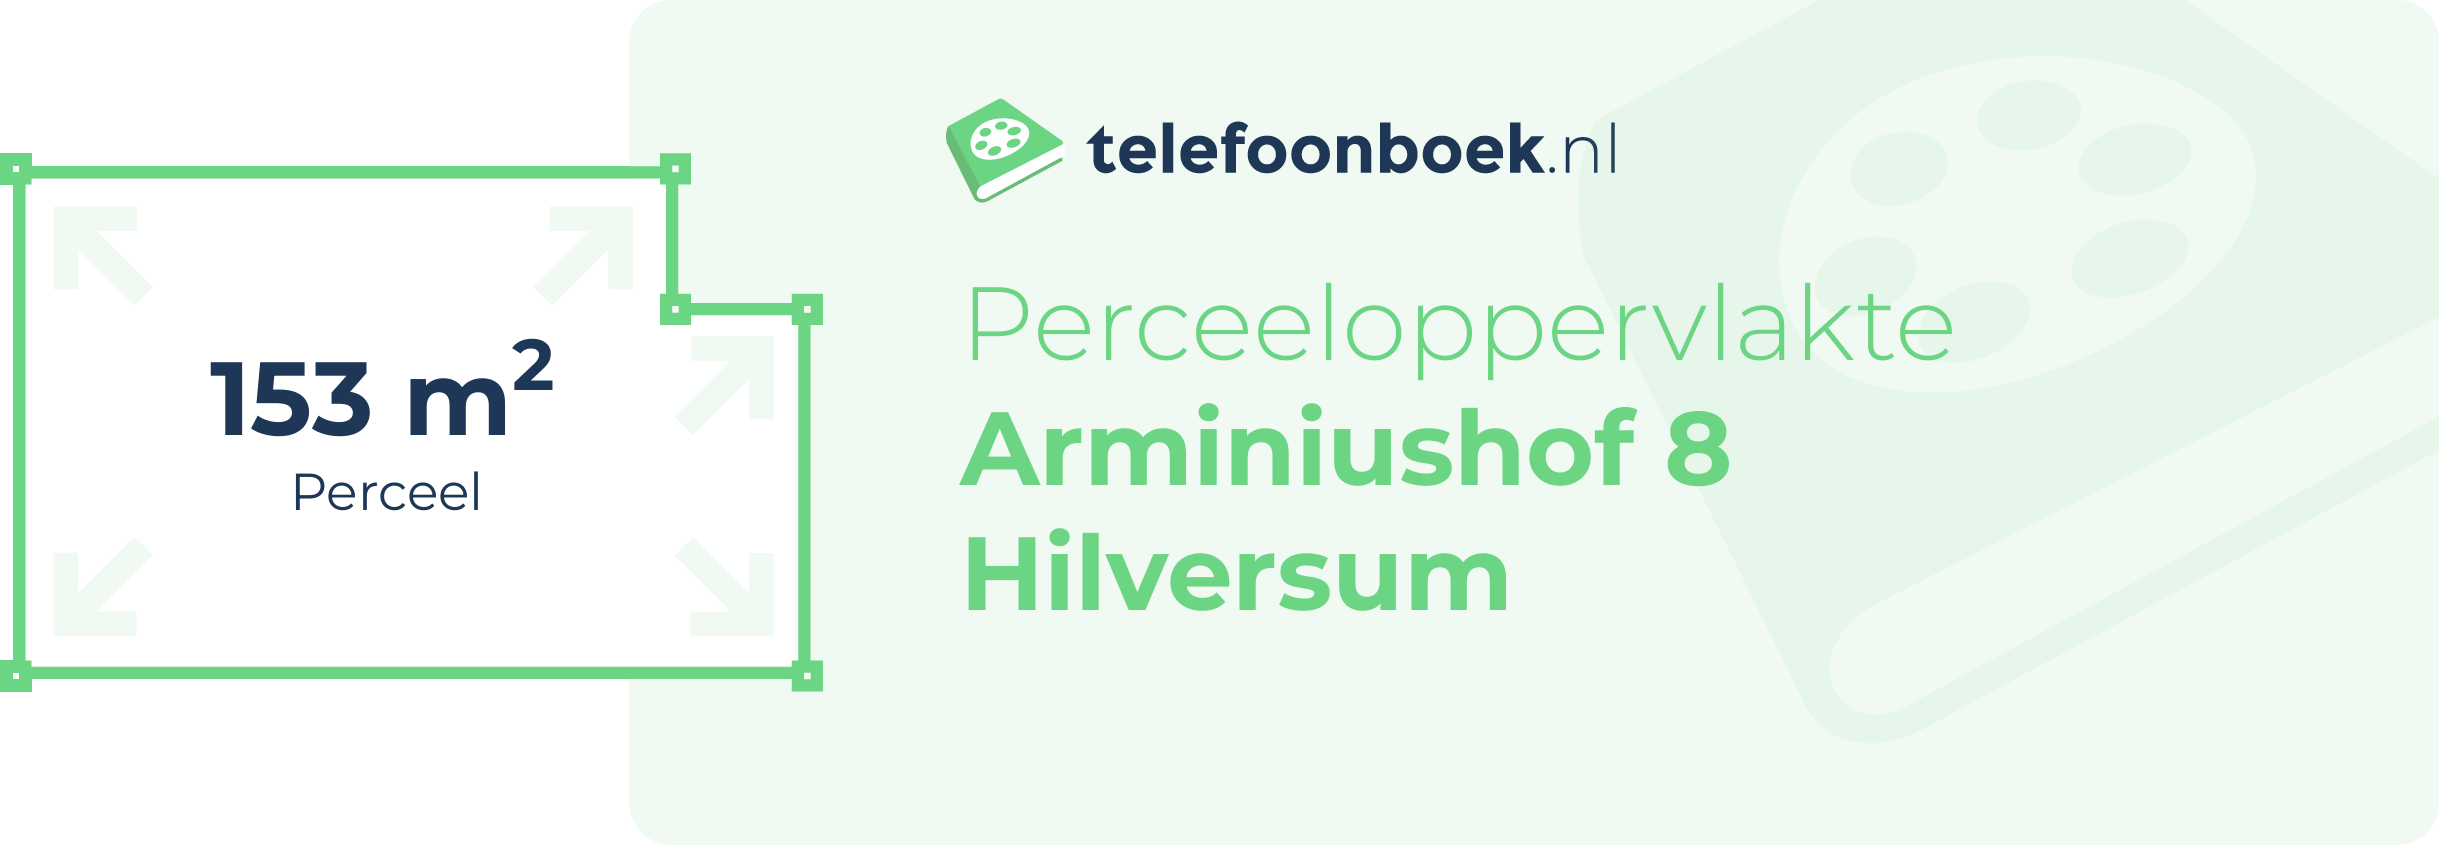 Perceeloppervlakte Arminiushof 8 Hilversum